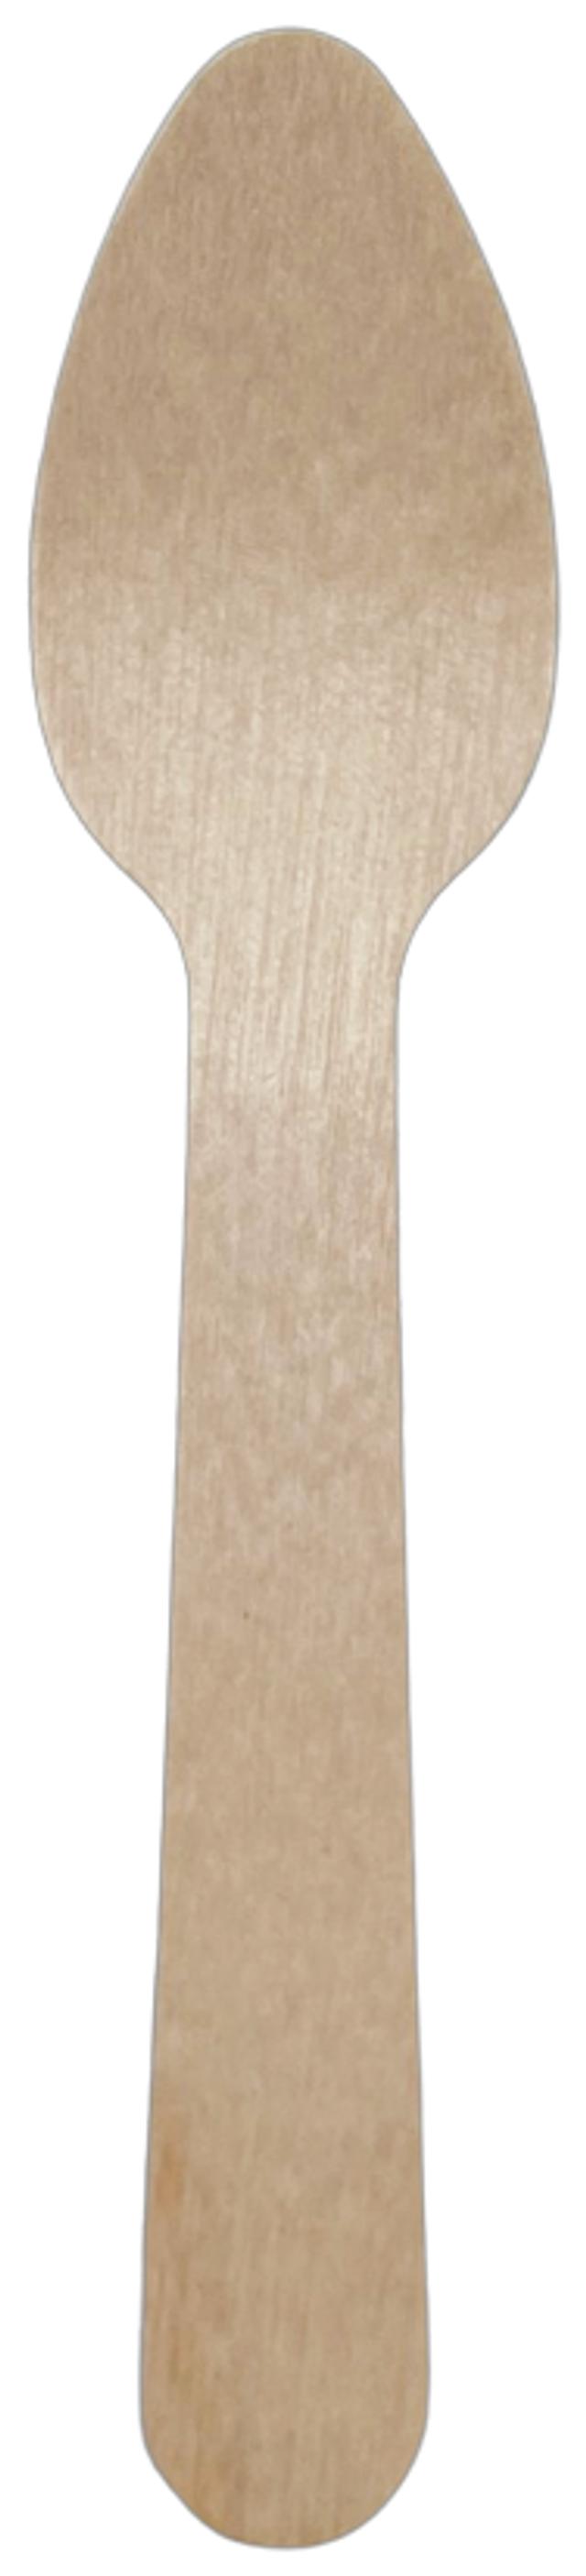 Spen puinen kahvilusikka 11cm 12kpl